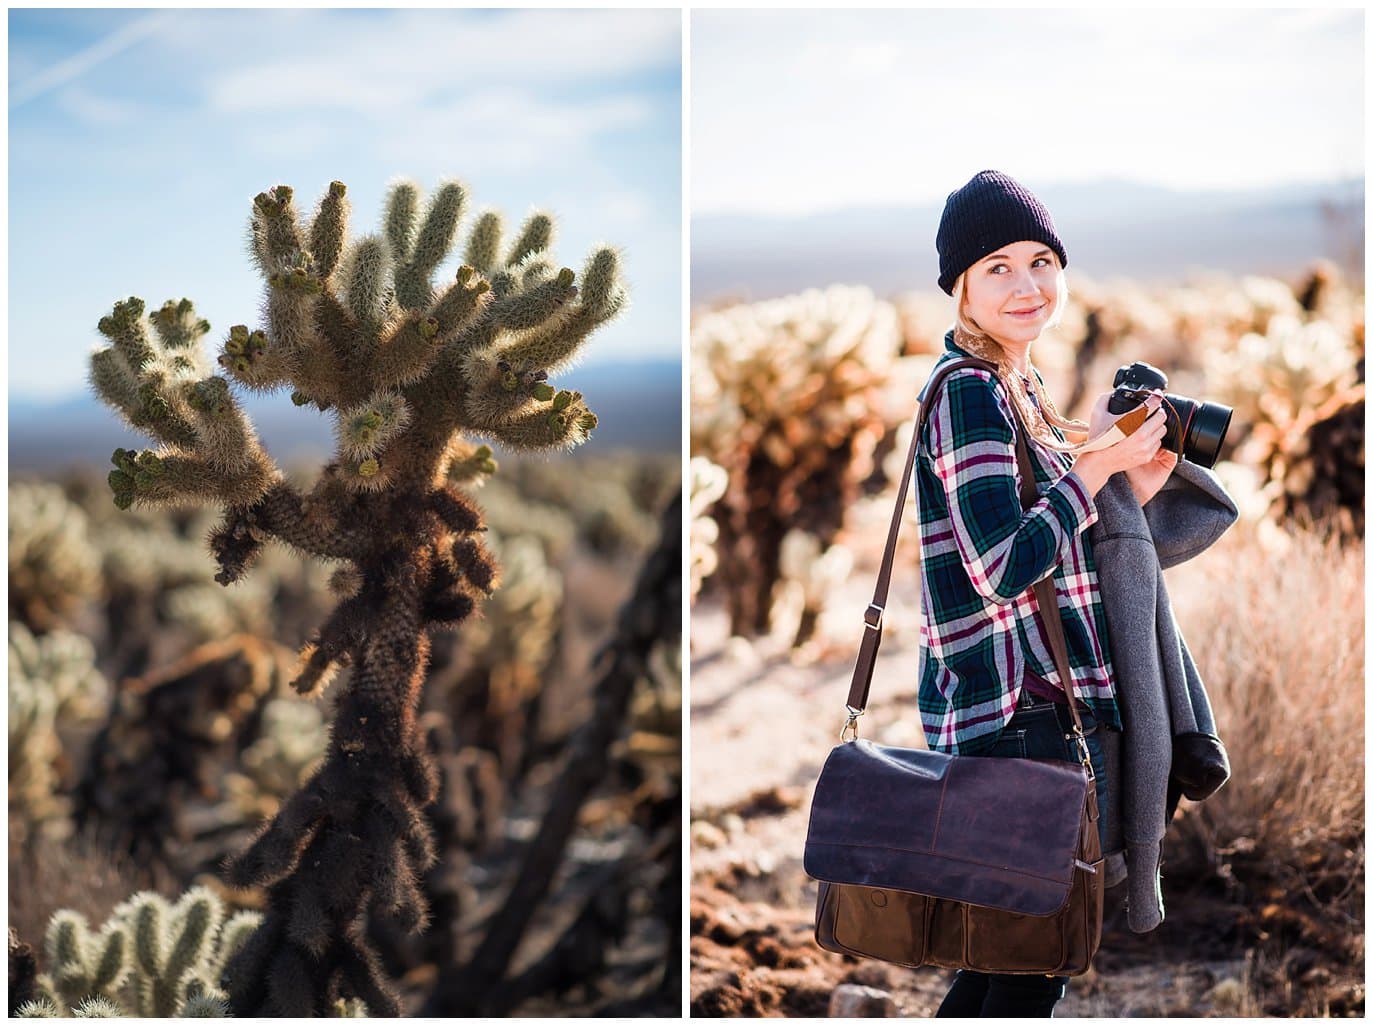 Ashley Mckenzie explring the cactus in the desert photo